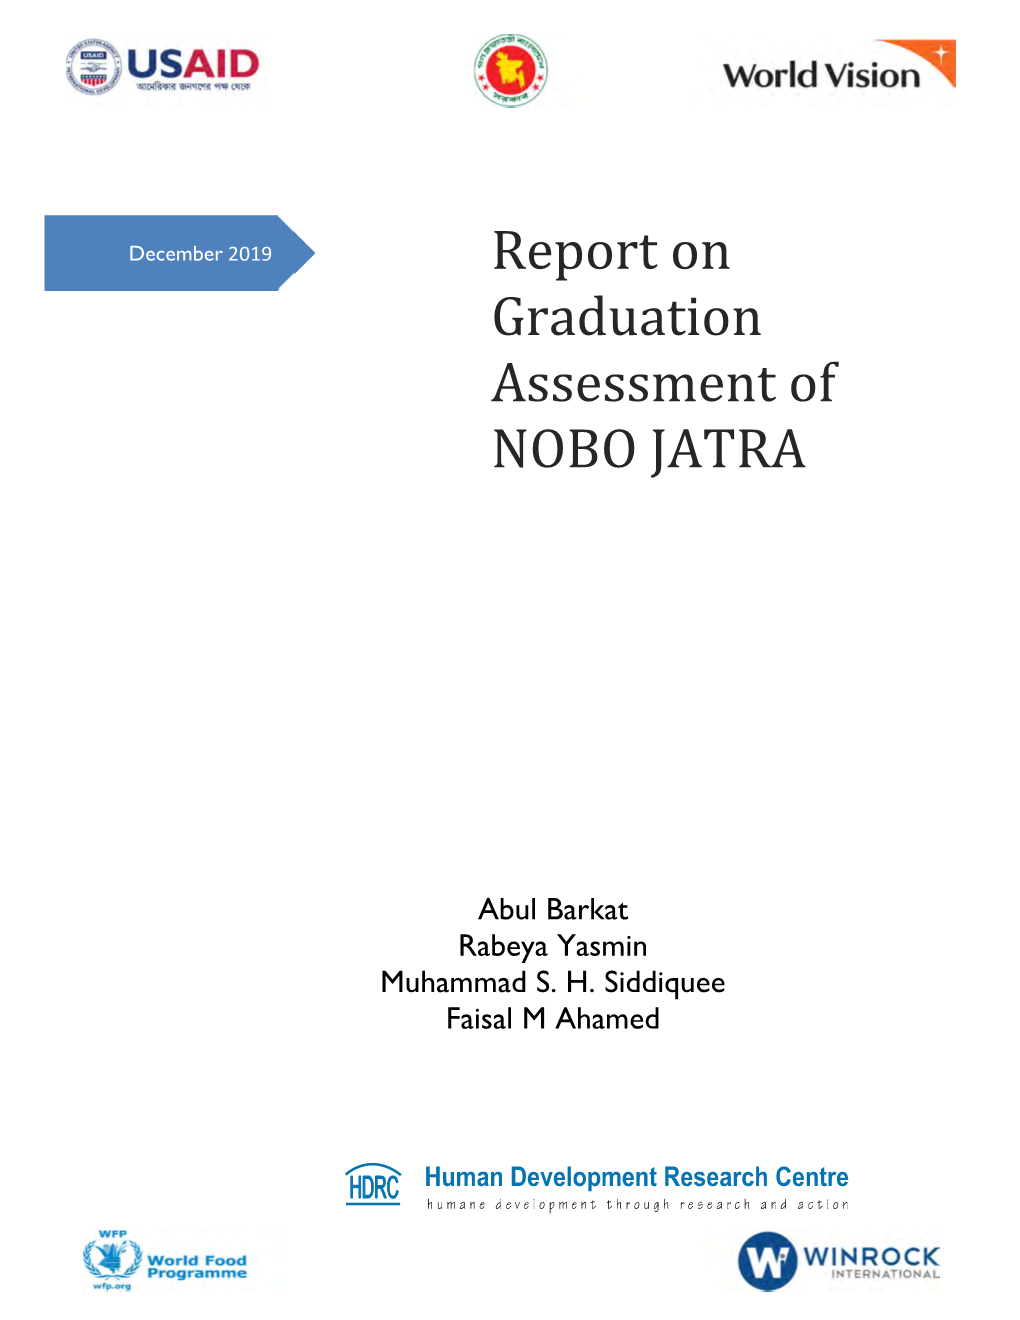 Report on Graduation Assessment of NOBO JATRA